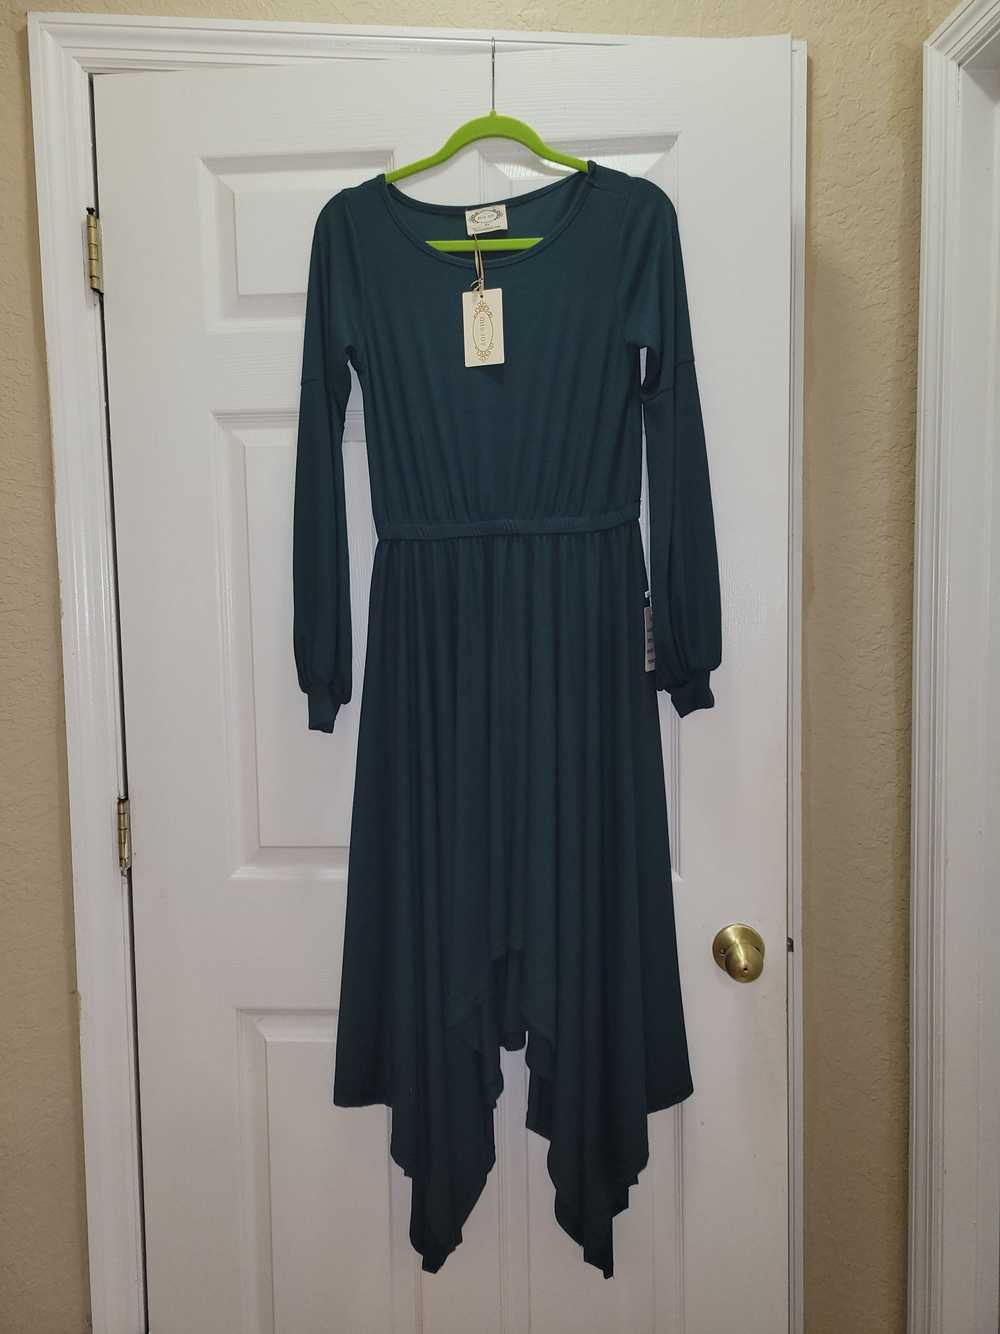 Joyfolie Capria Dress in Teal - image 4